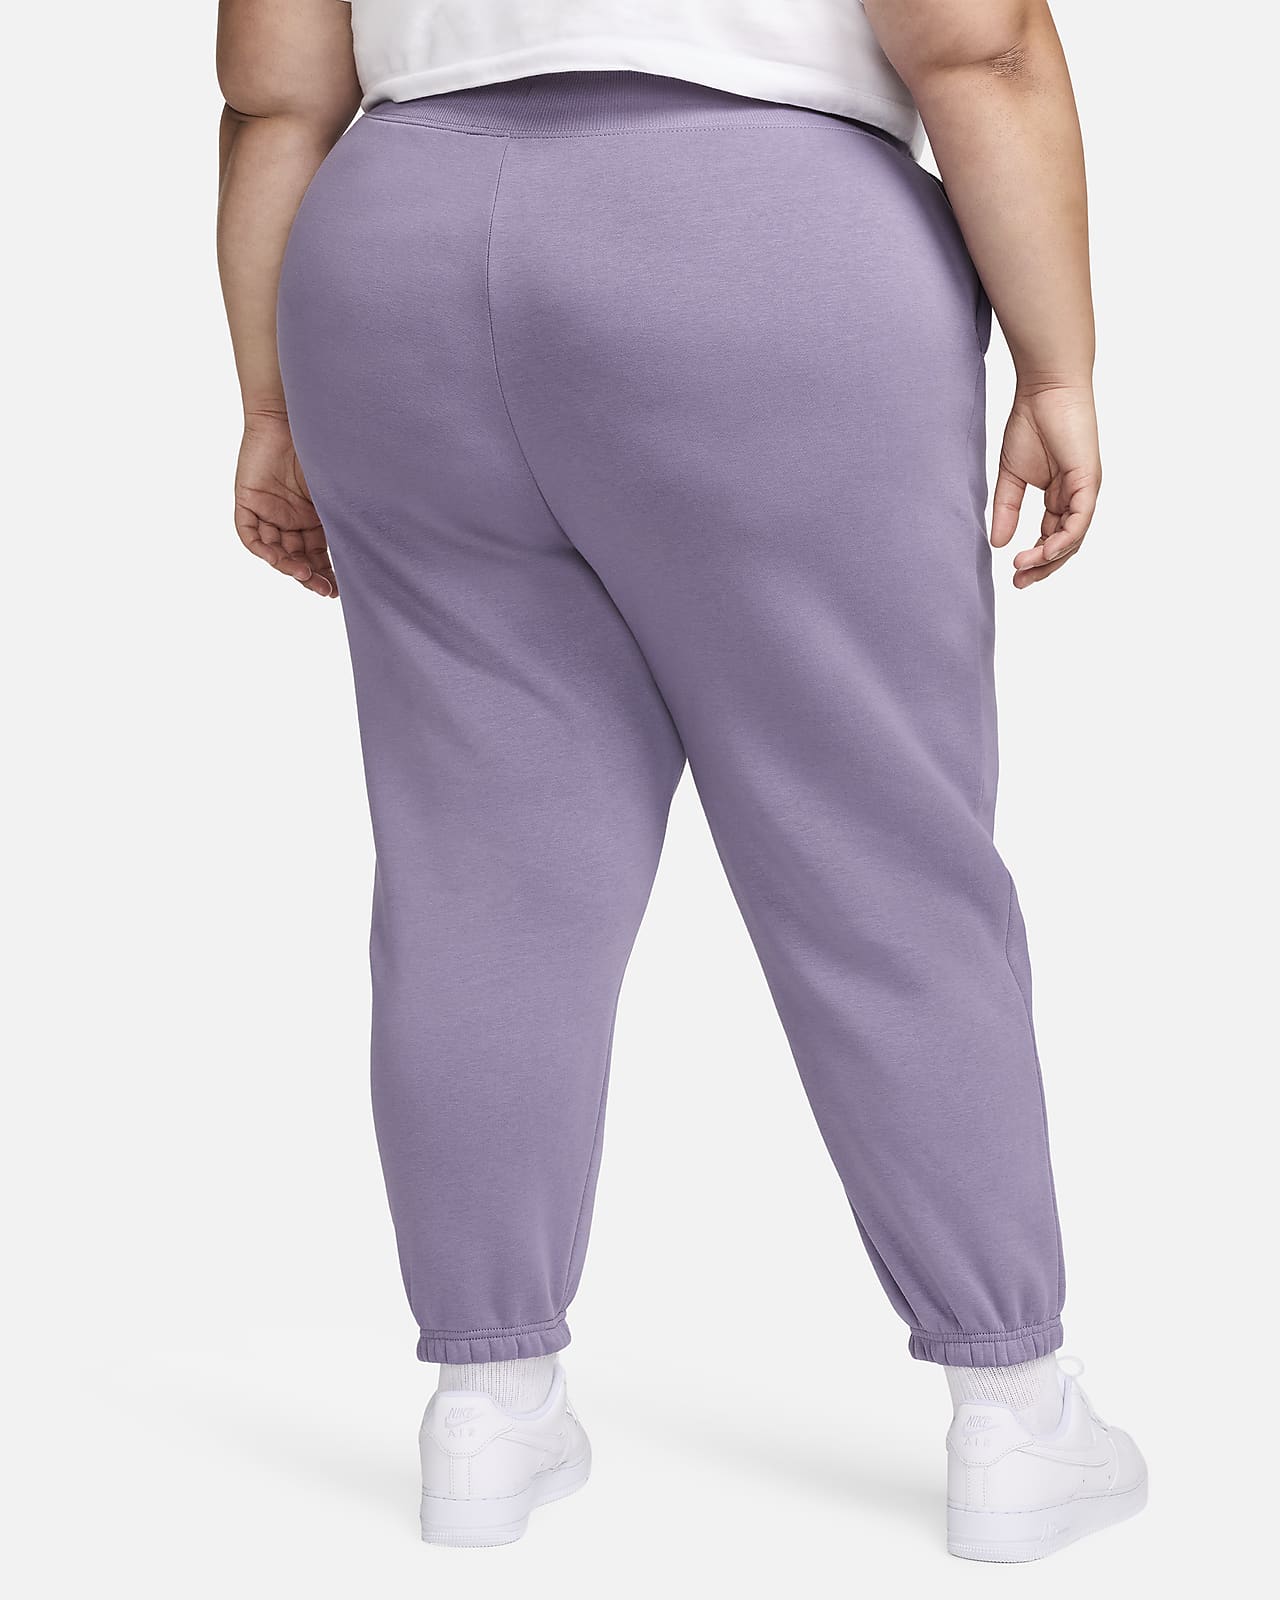 Nike Womens Pants Adult Plus Size 2X Gray Sweat Pants Sportswear